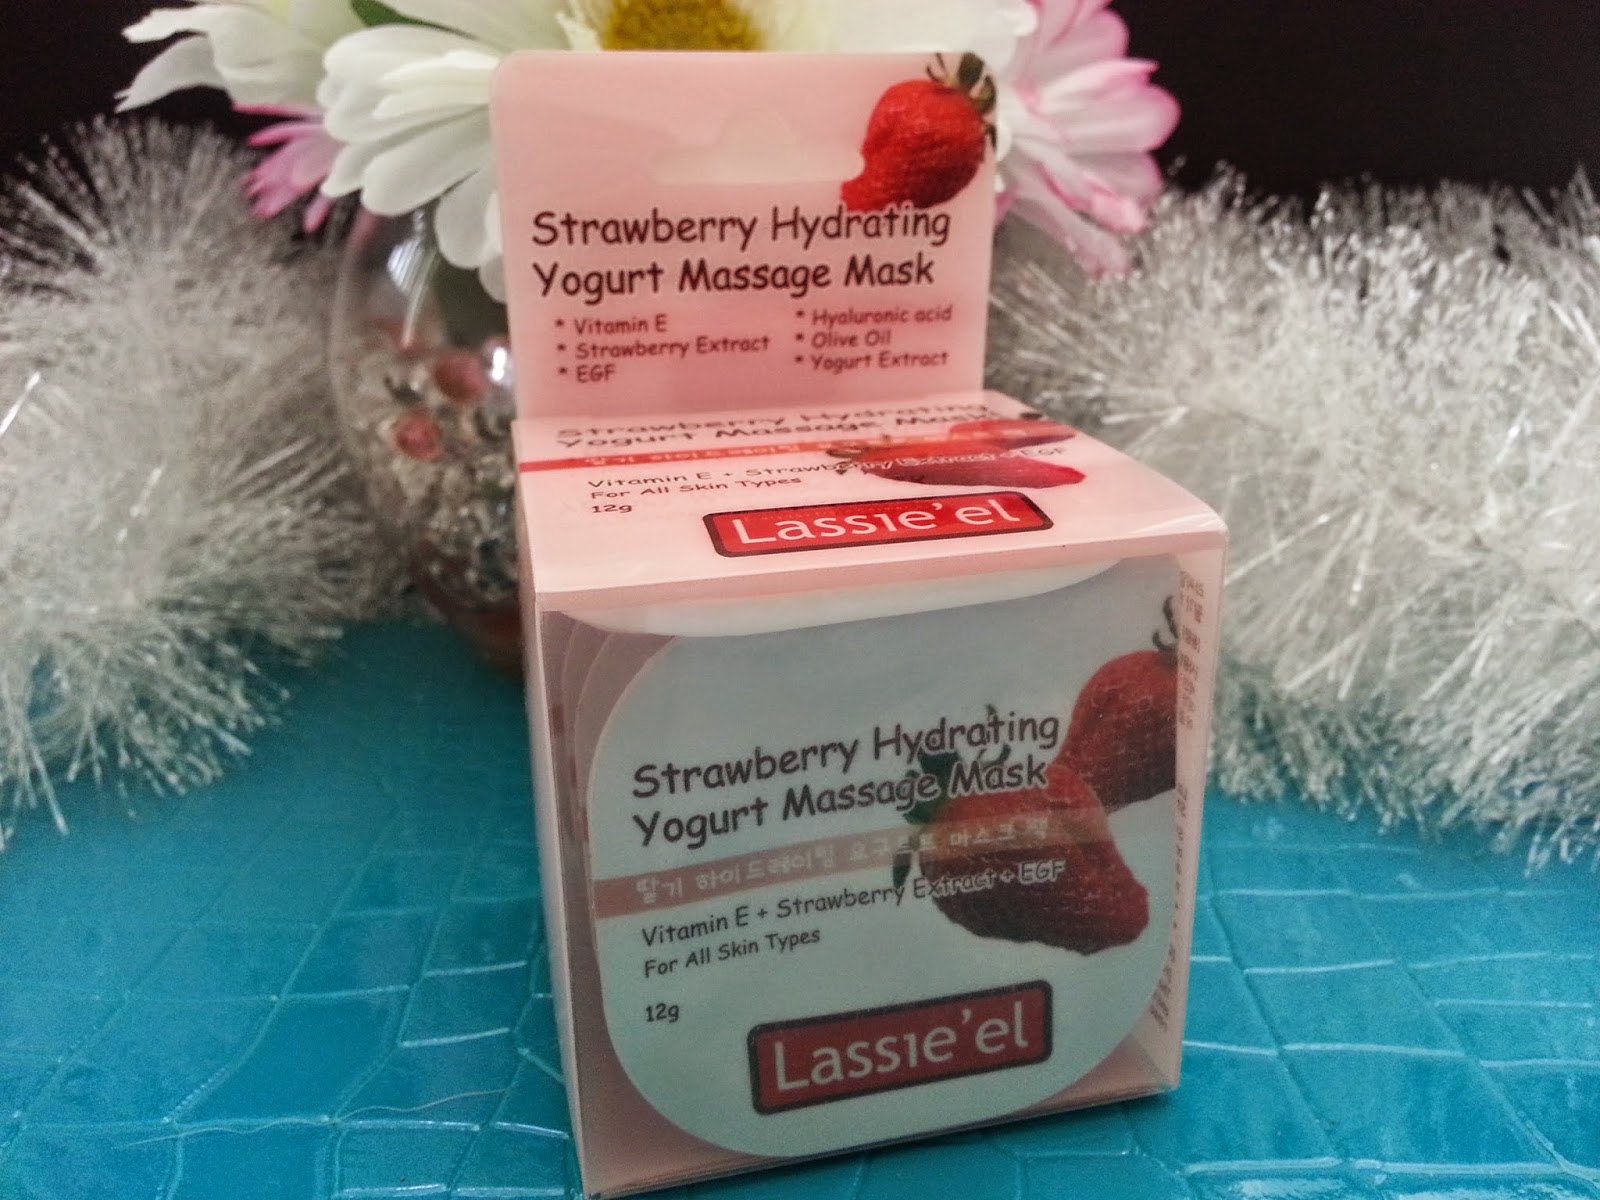 Lassie'el Strawberry Hydrating Yogurt Massage Mask Review